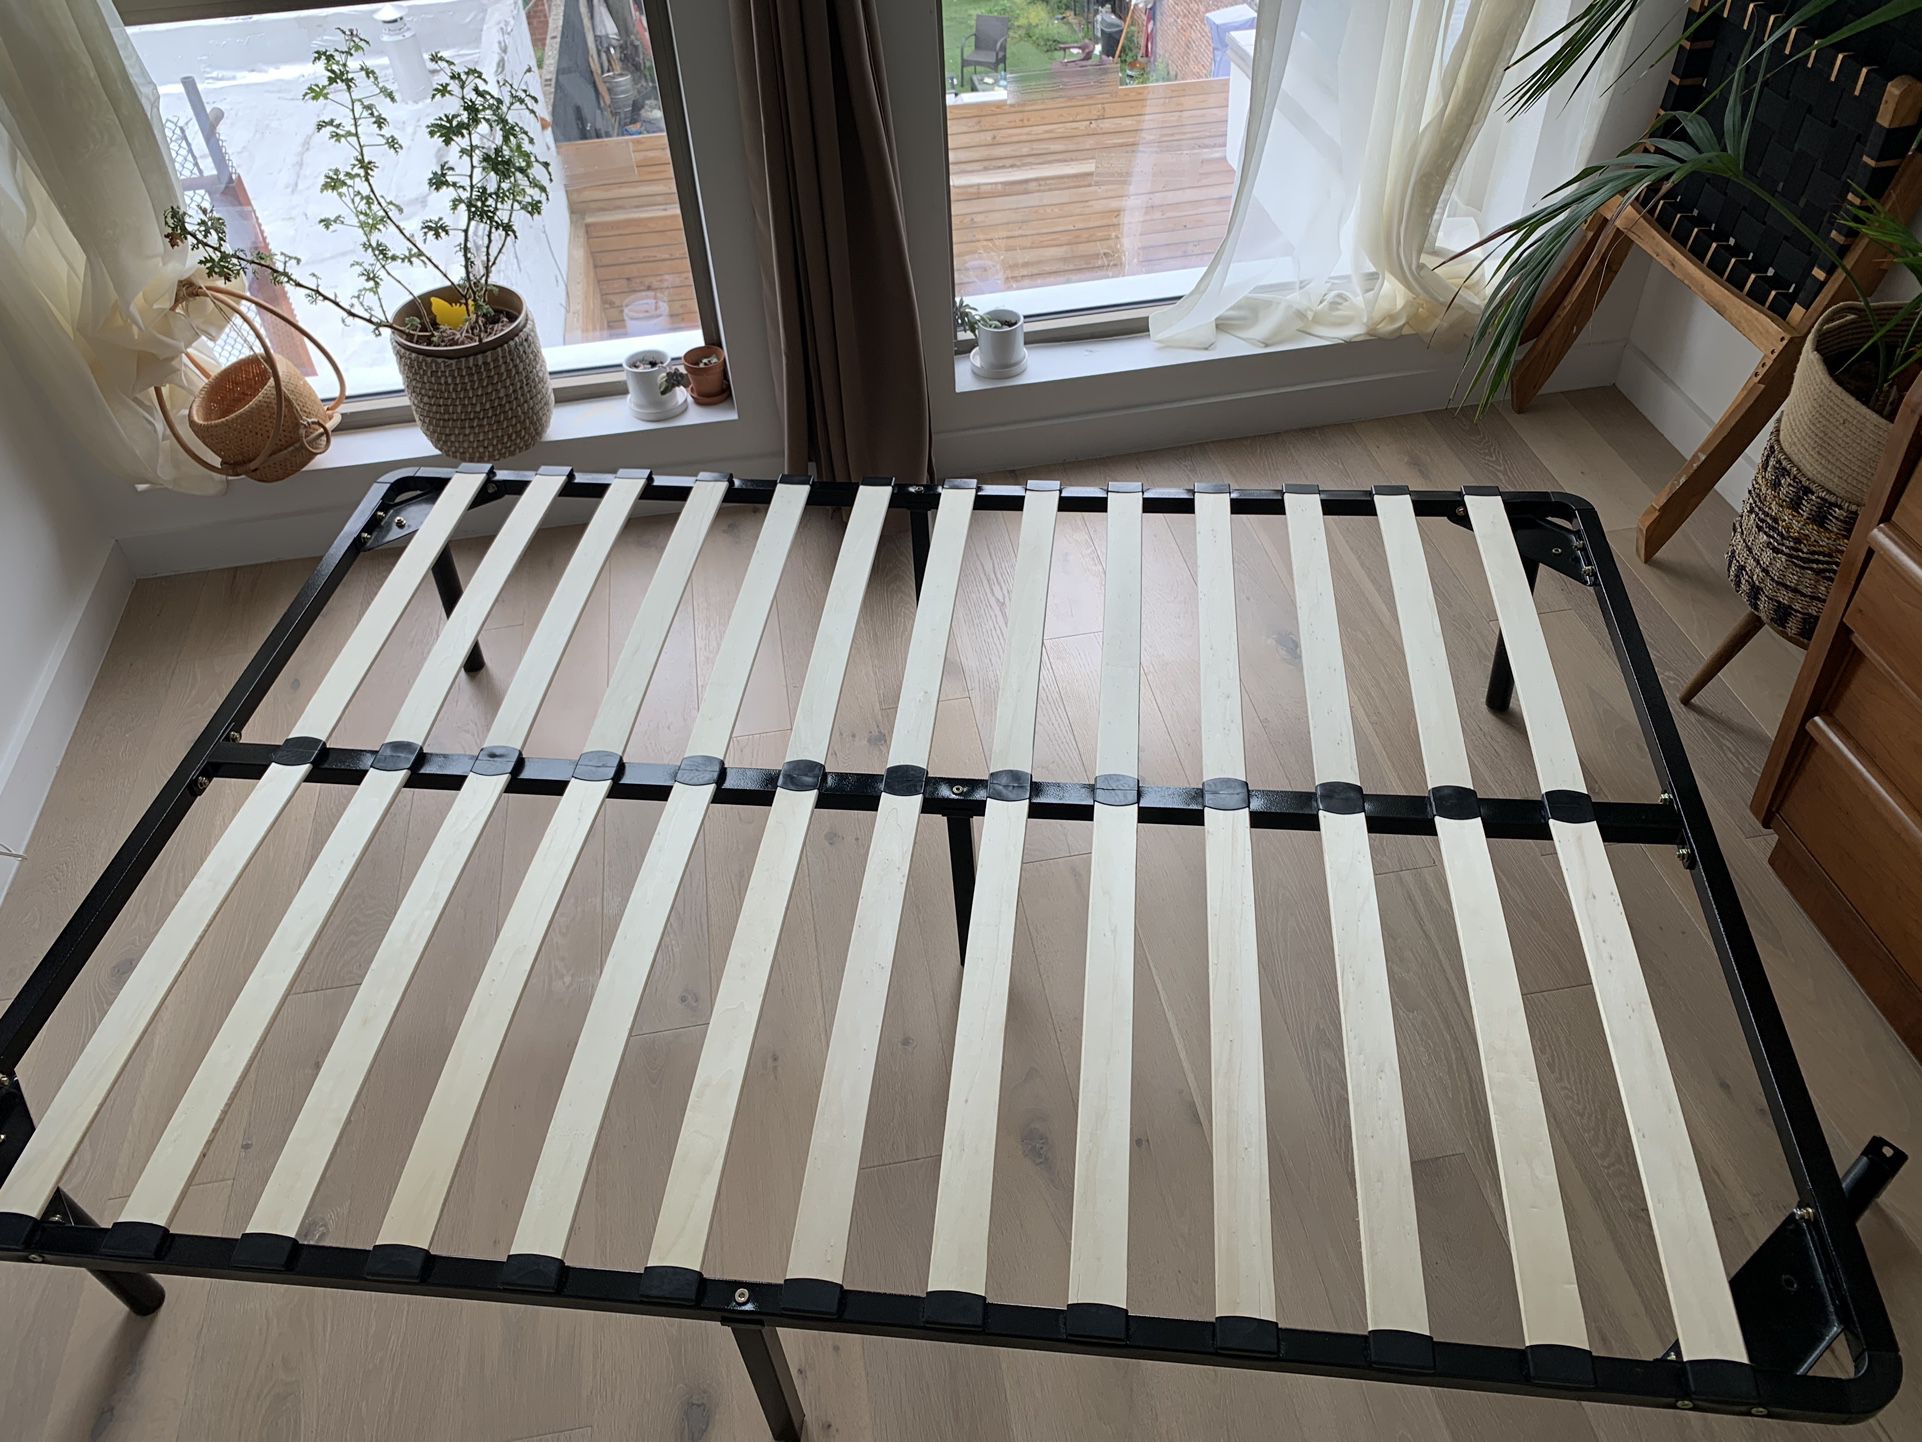 Full Sized Metal Bed Frame.